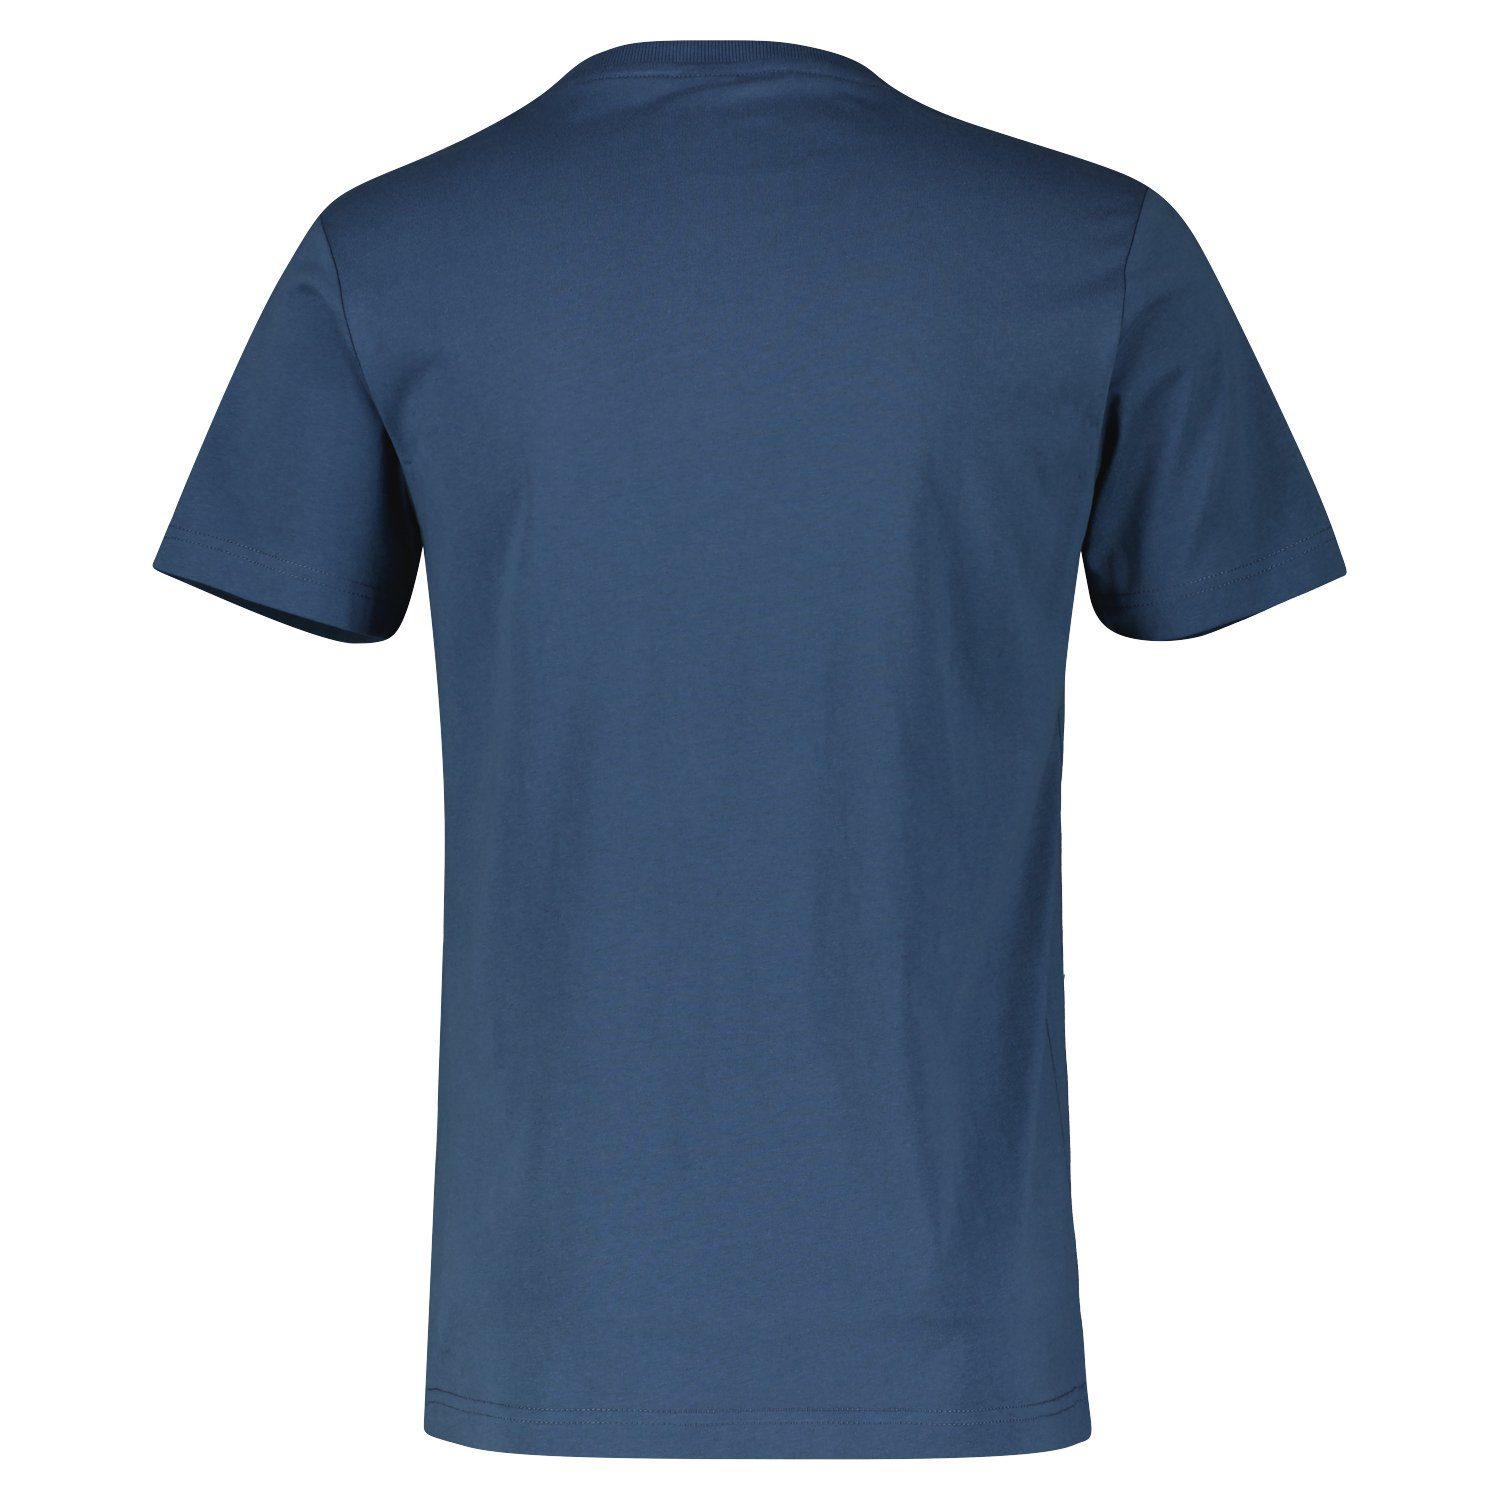 mit T-Shirt blue großem storm Logofrontprint LERROS